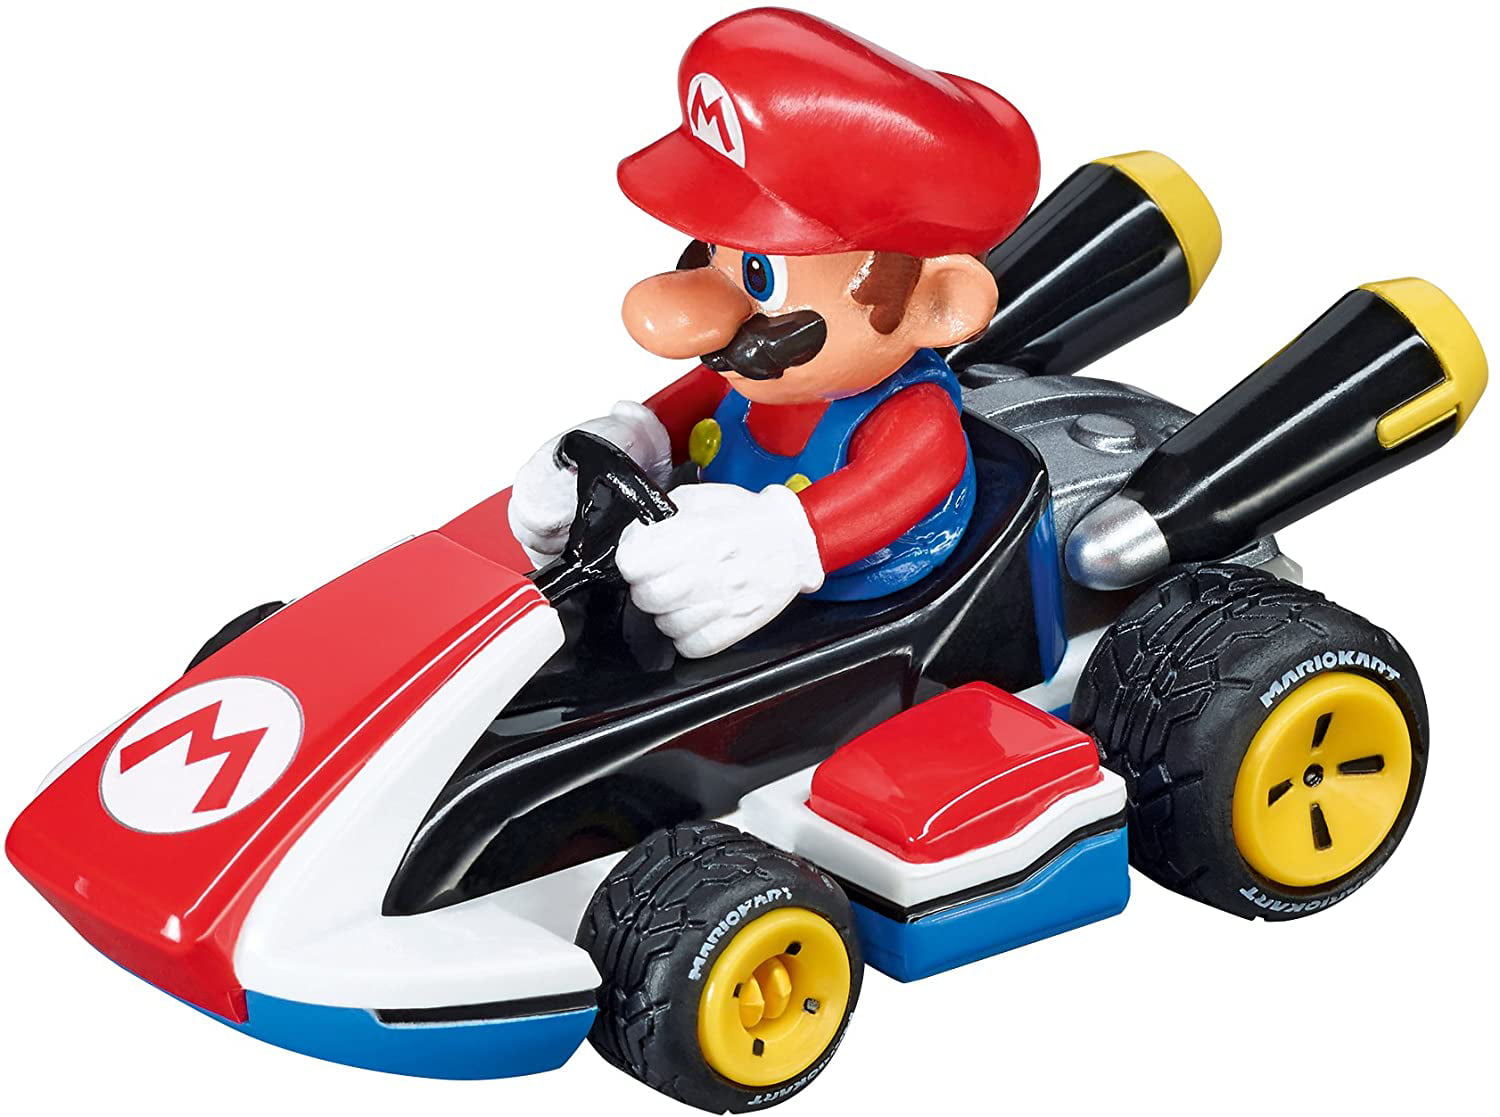 Carrera 64033 Mario Kart - Mario 1:43 Scale Analog Slot Car Vehicle for  GO!!! Electric and Battery Slot Car Racing Track Sets 